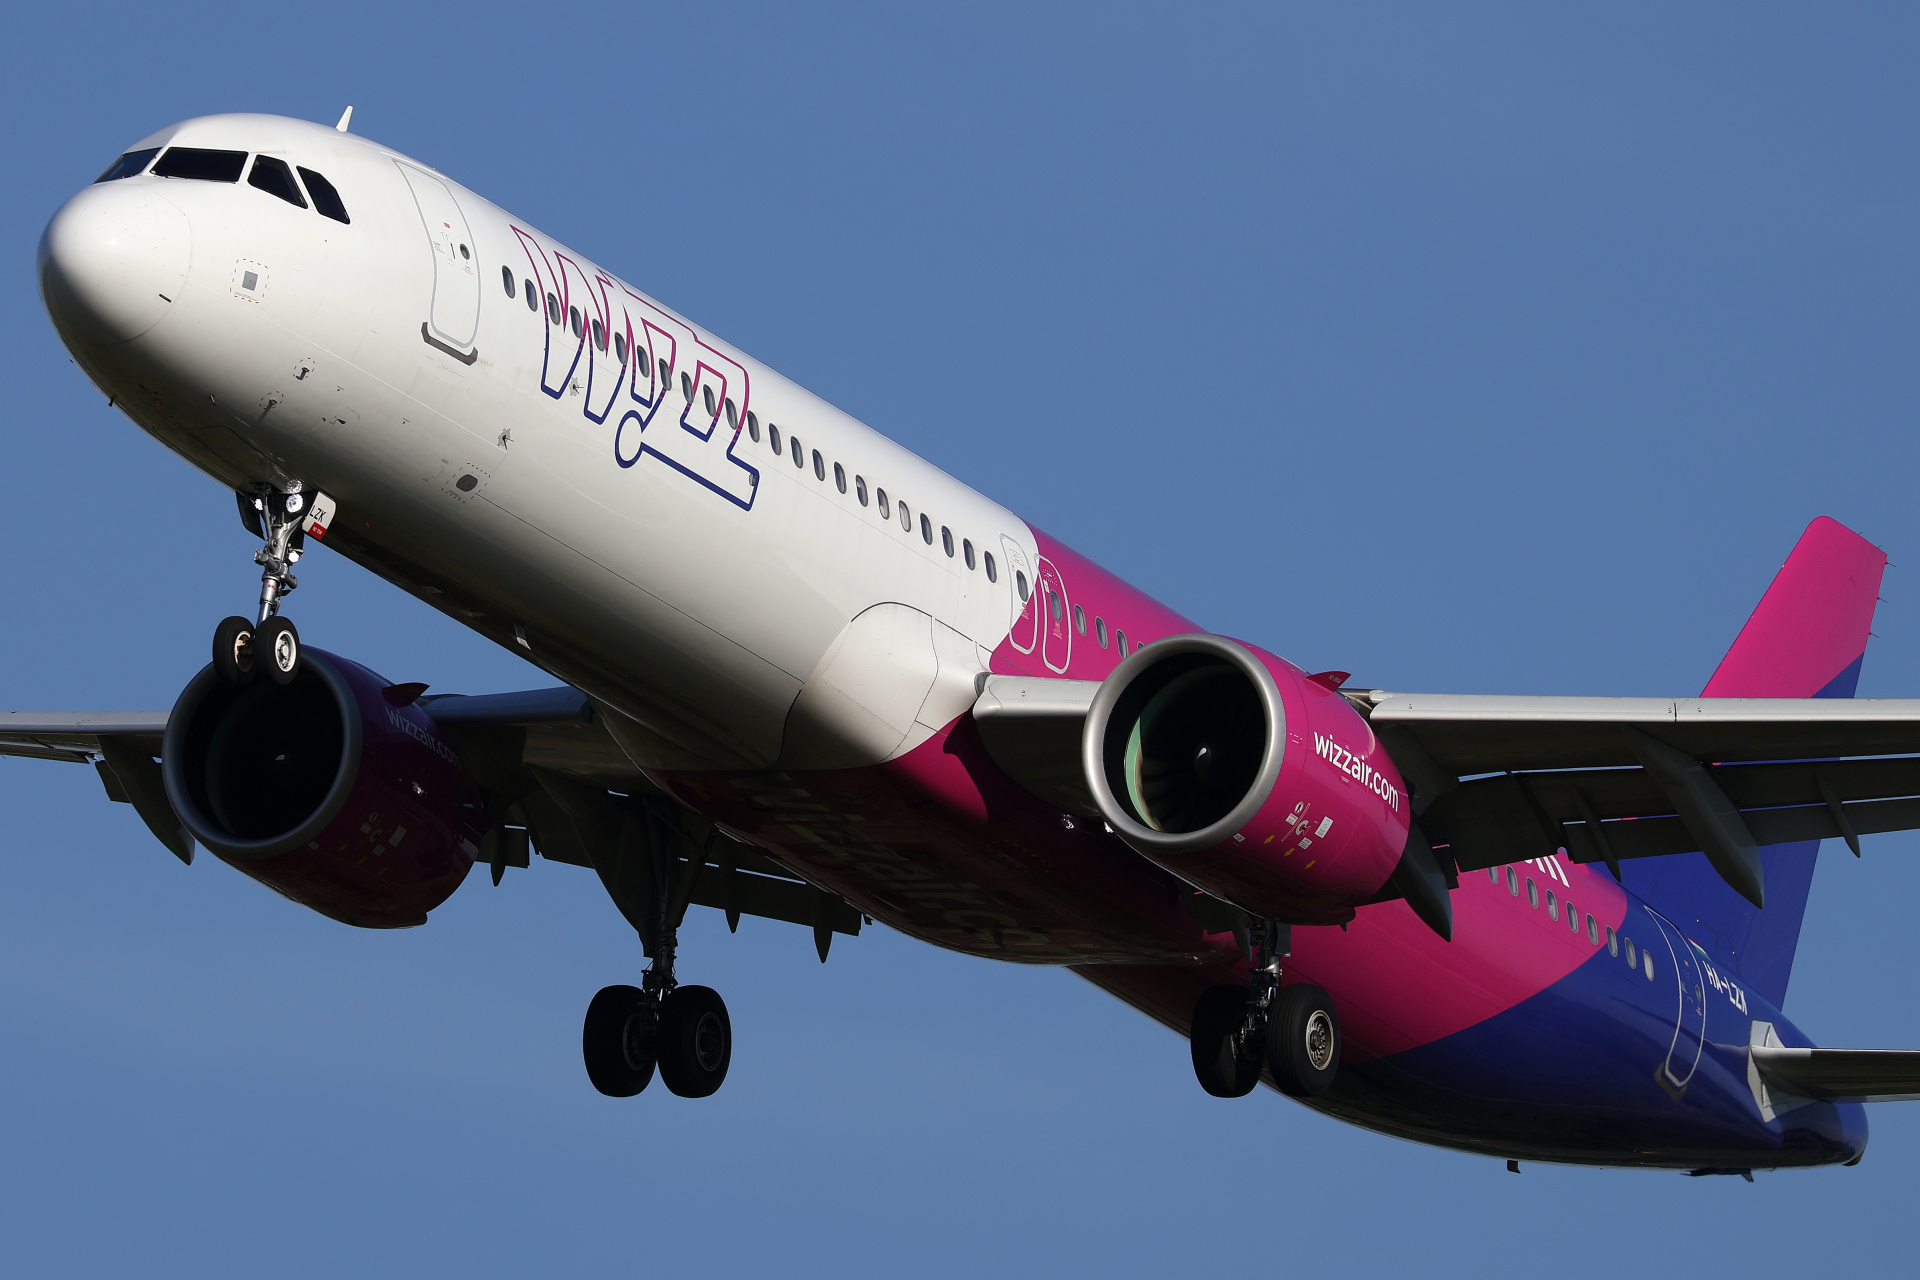 HA-LZK (Aircraft » EPWA Spotting » Airbus A321neo » Wizz Air)